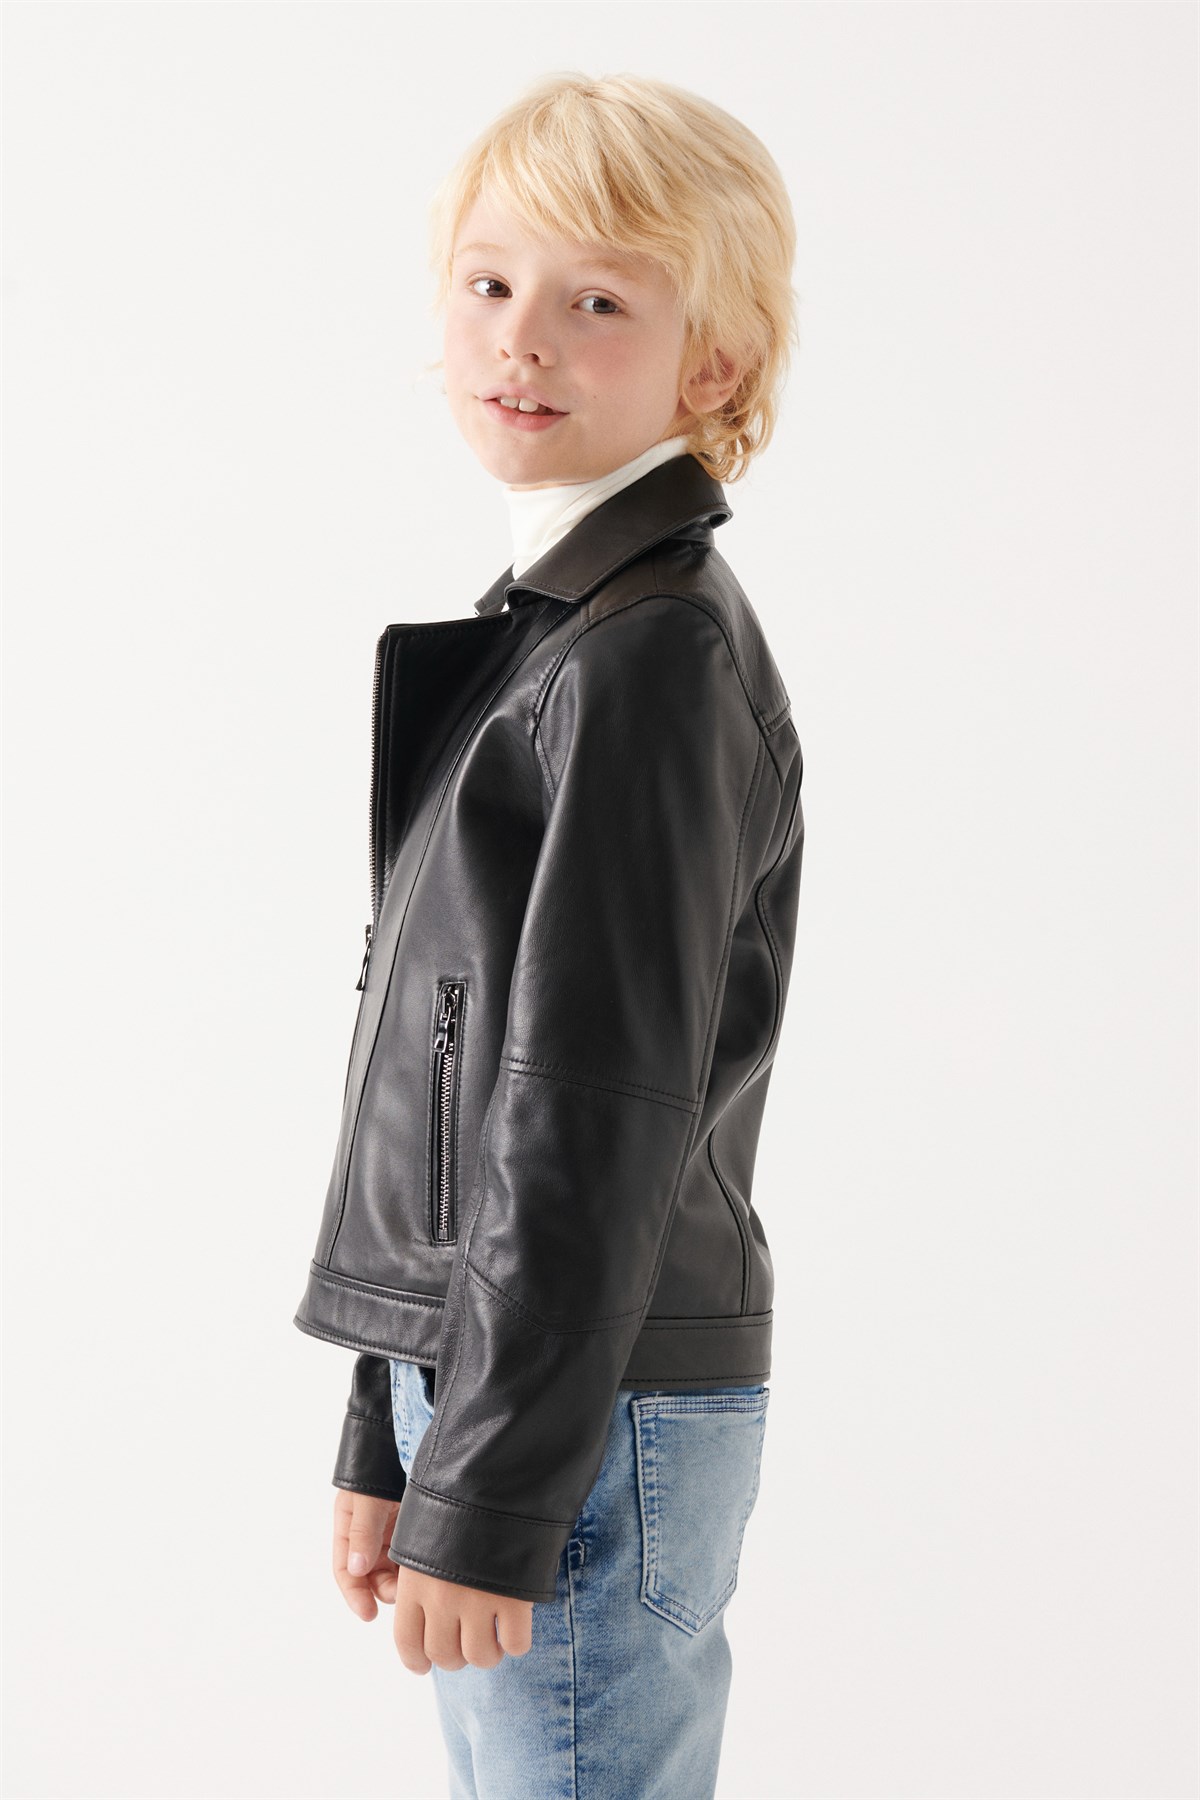 BARNY Boys Black Leather Jacket | Boys Leather and Shearling Jacket & Coat